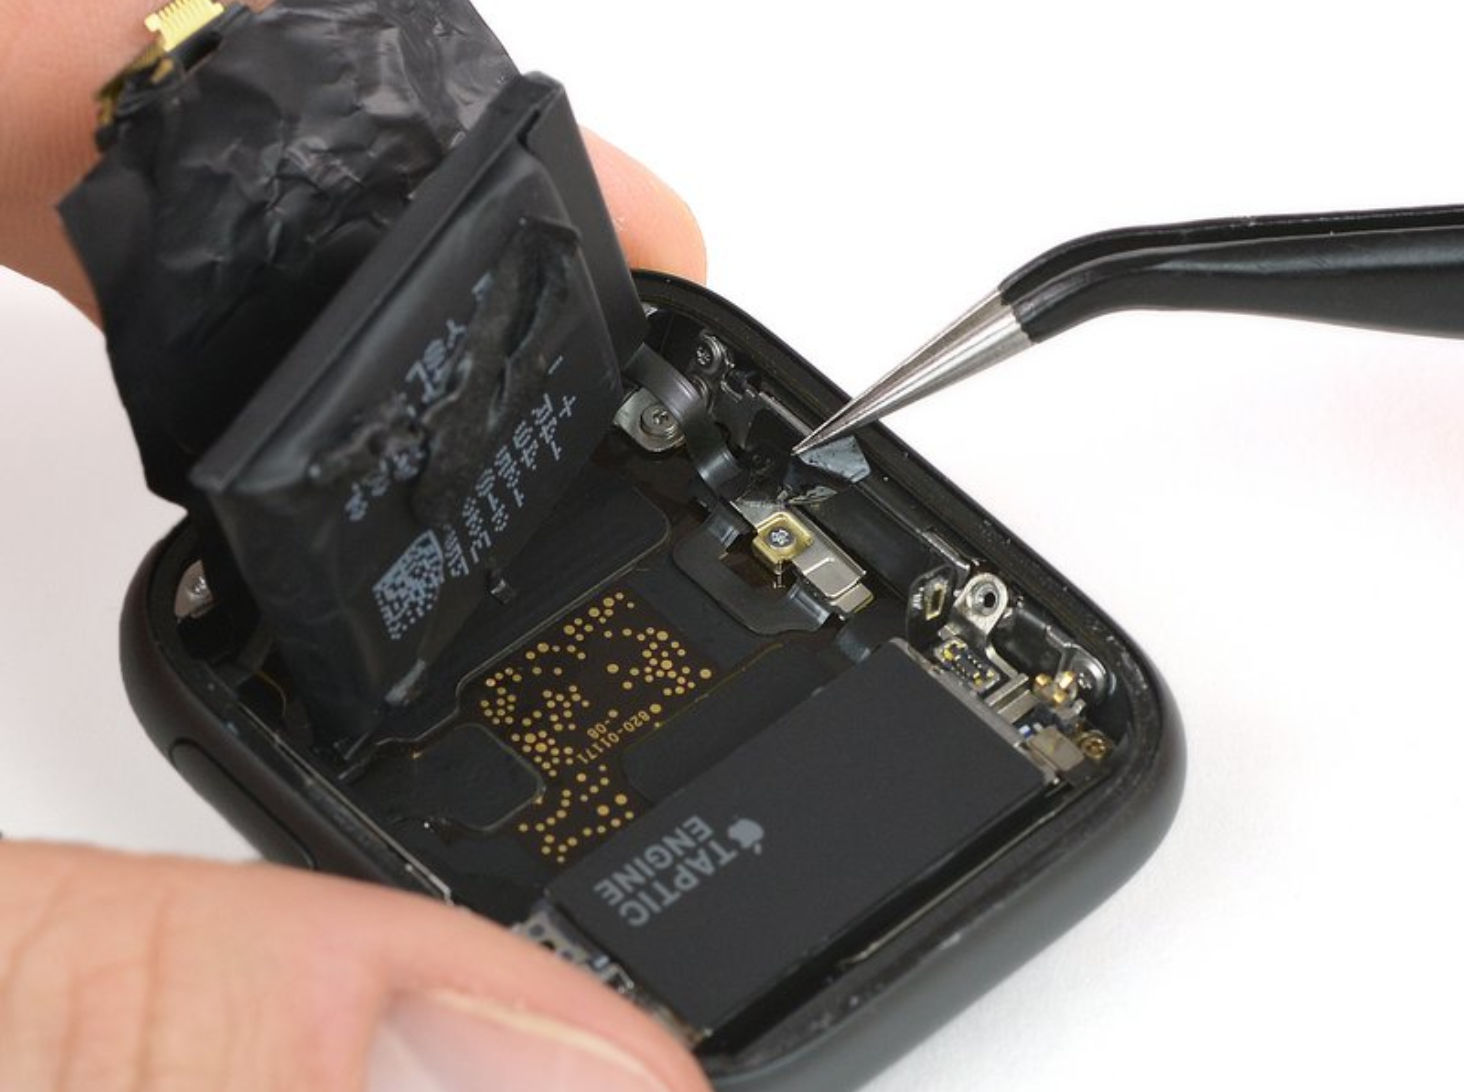 Battery LCD Screen Camera iPhone Repair Service